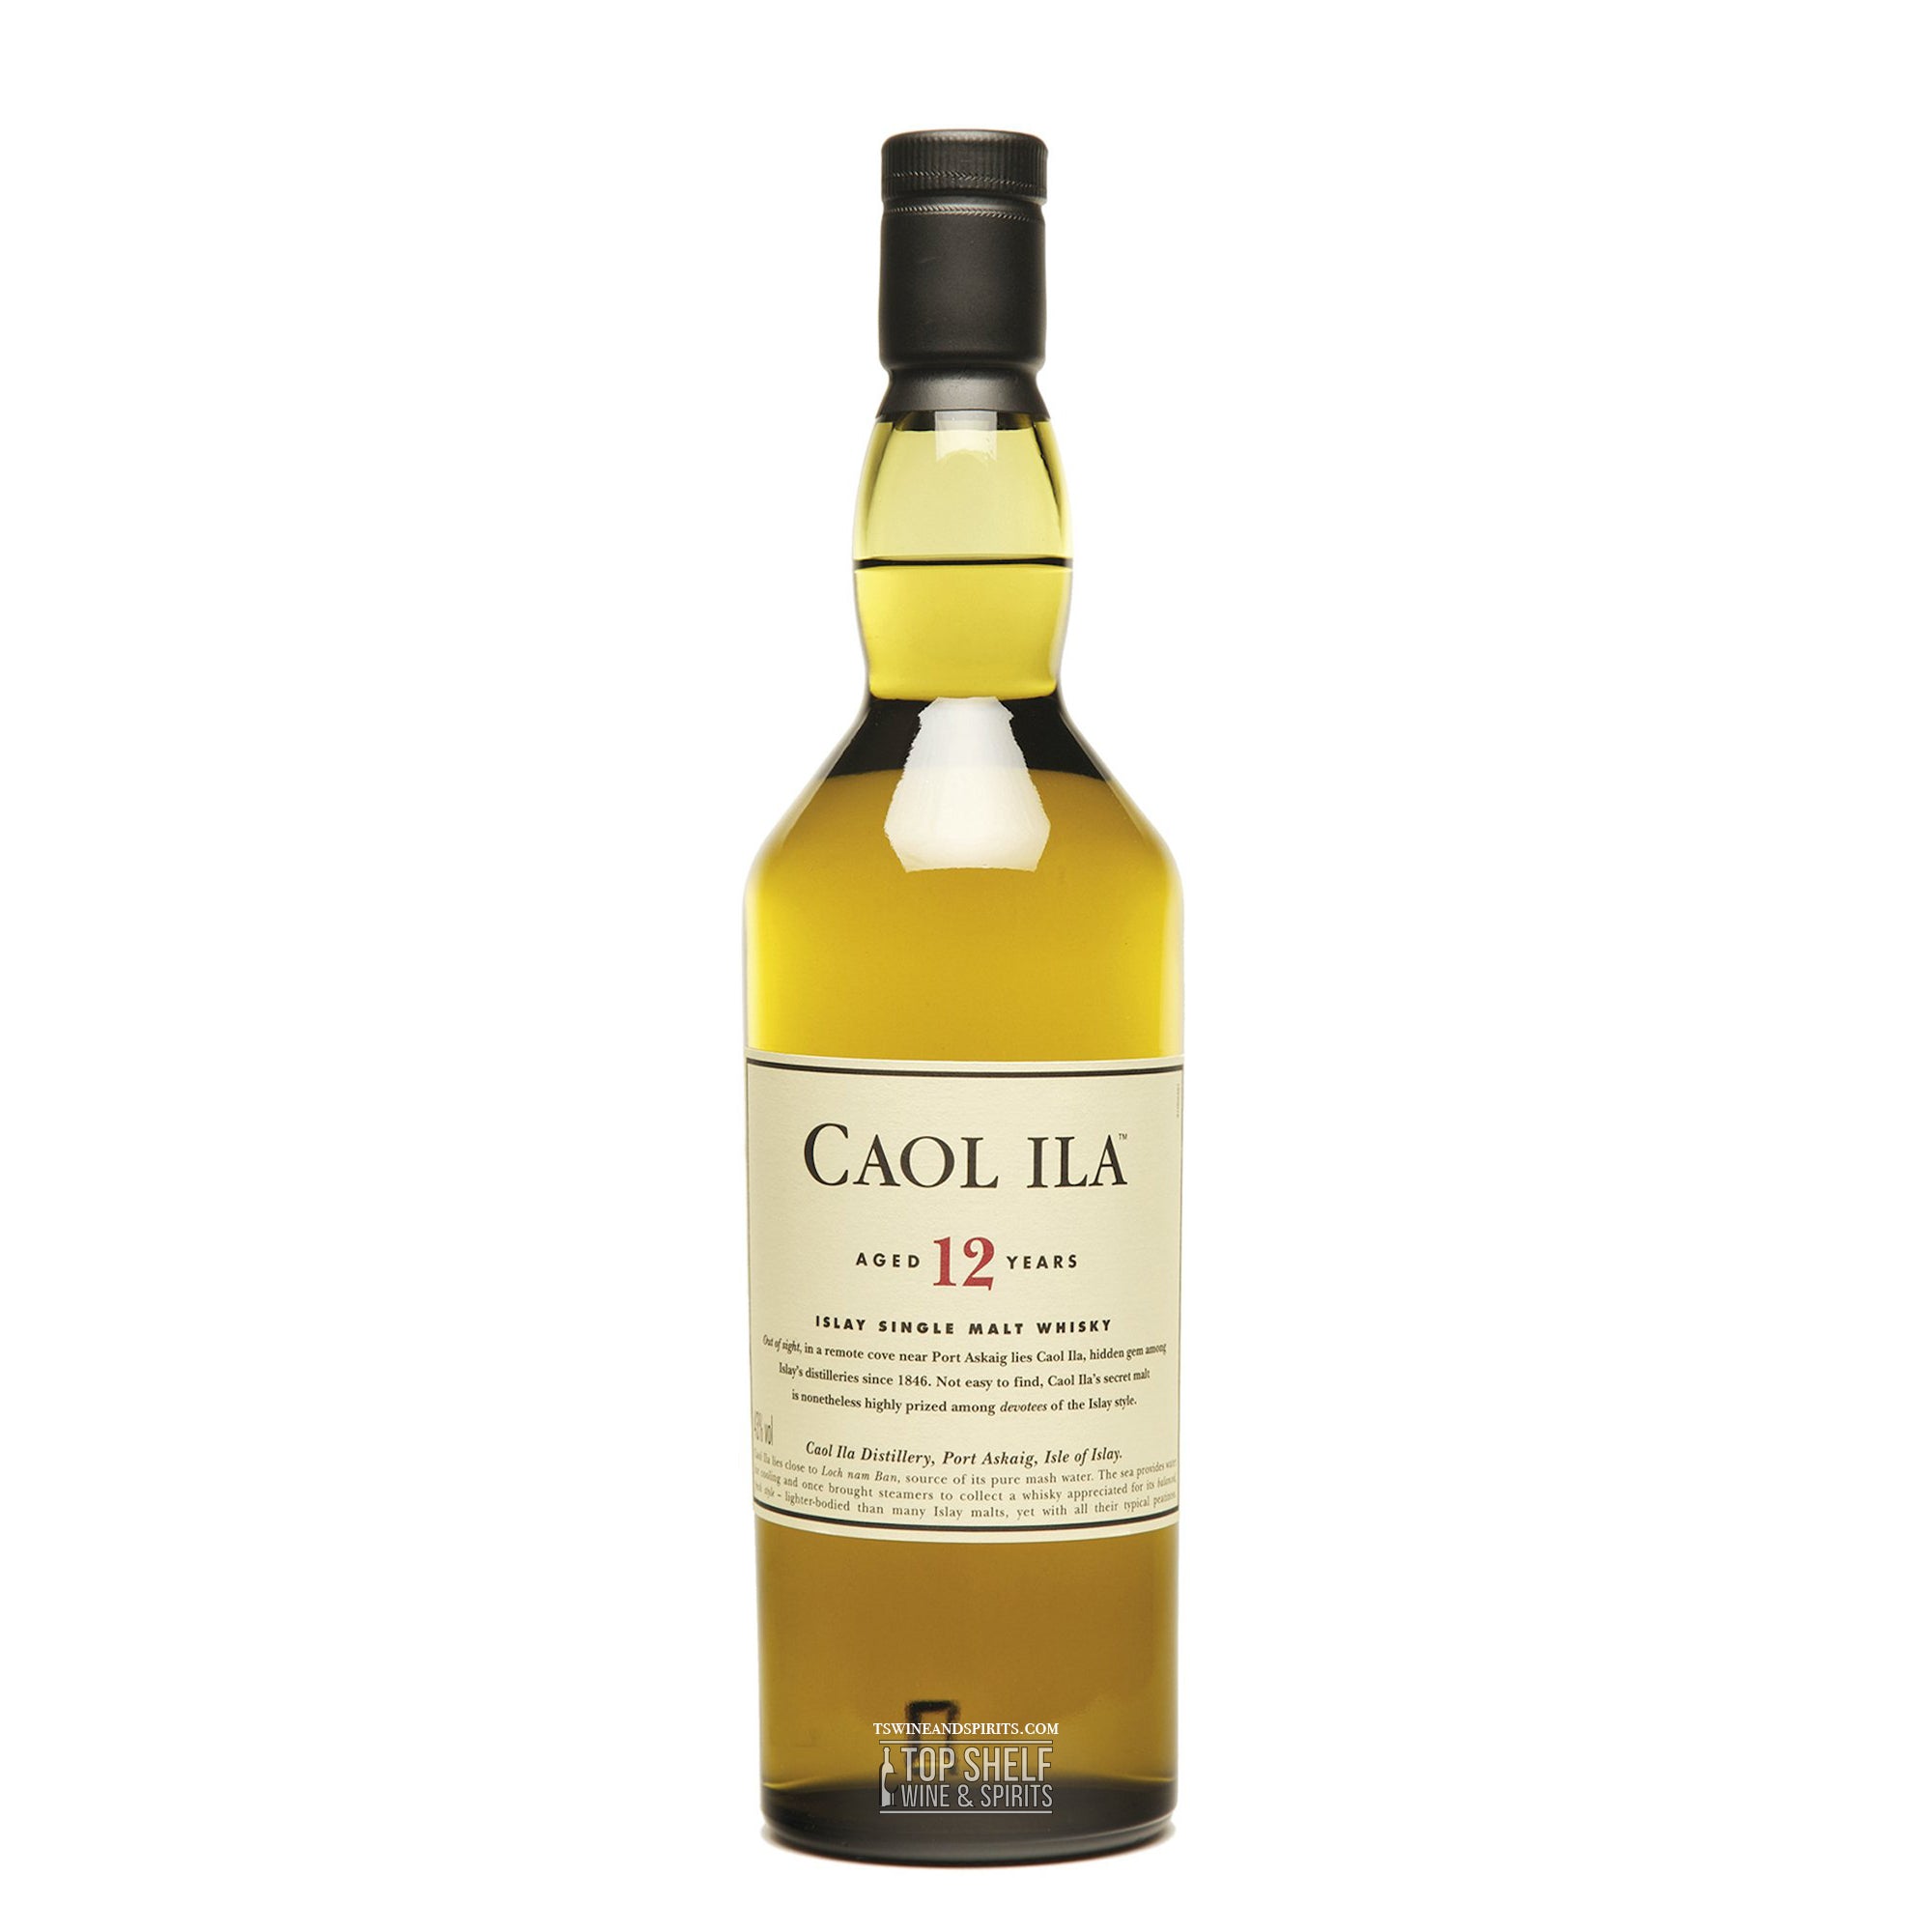 Caol Ila 12 Year Old Single Malt Scotch Whisky 700ml Bottle